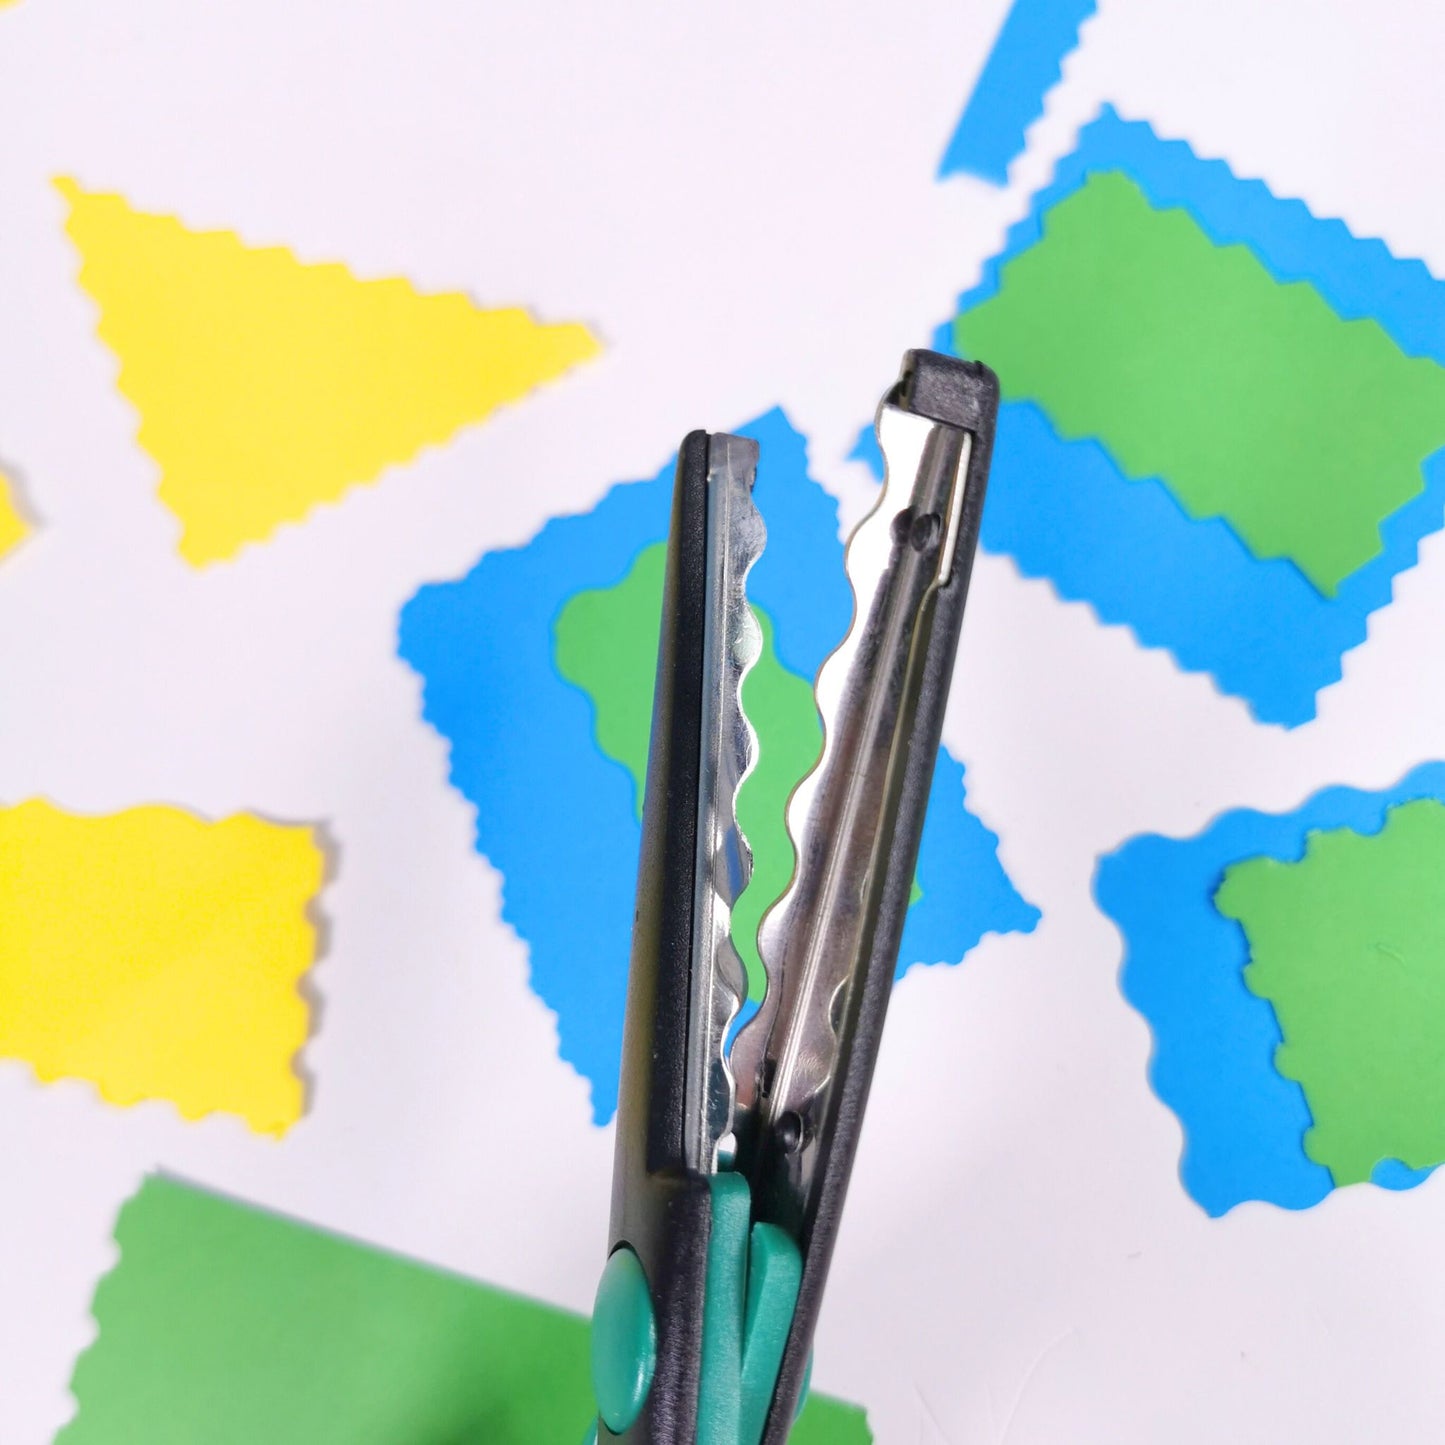 12 Pairs of Decorative Paper Edging Scissors in a Carousel